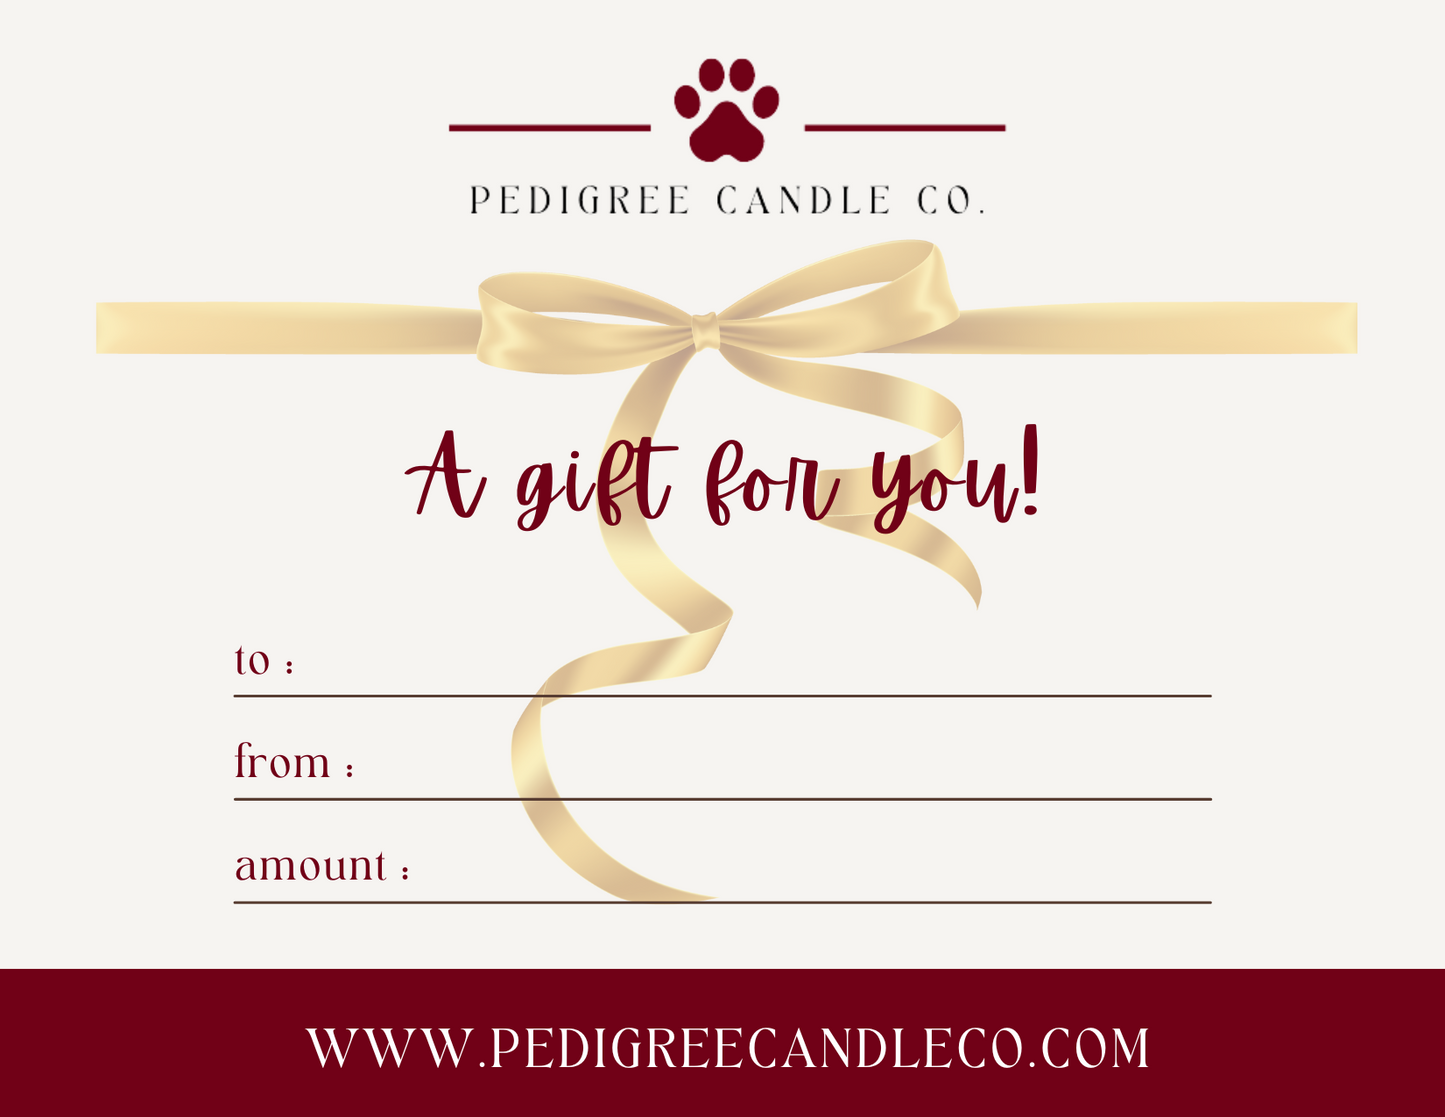 Pedigree Candle Co. Gift Card